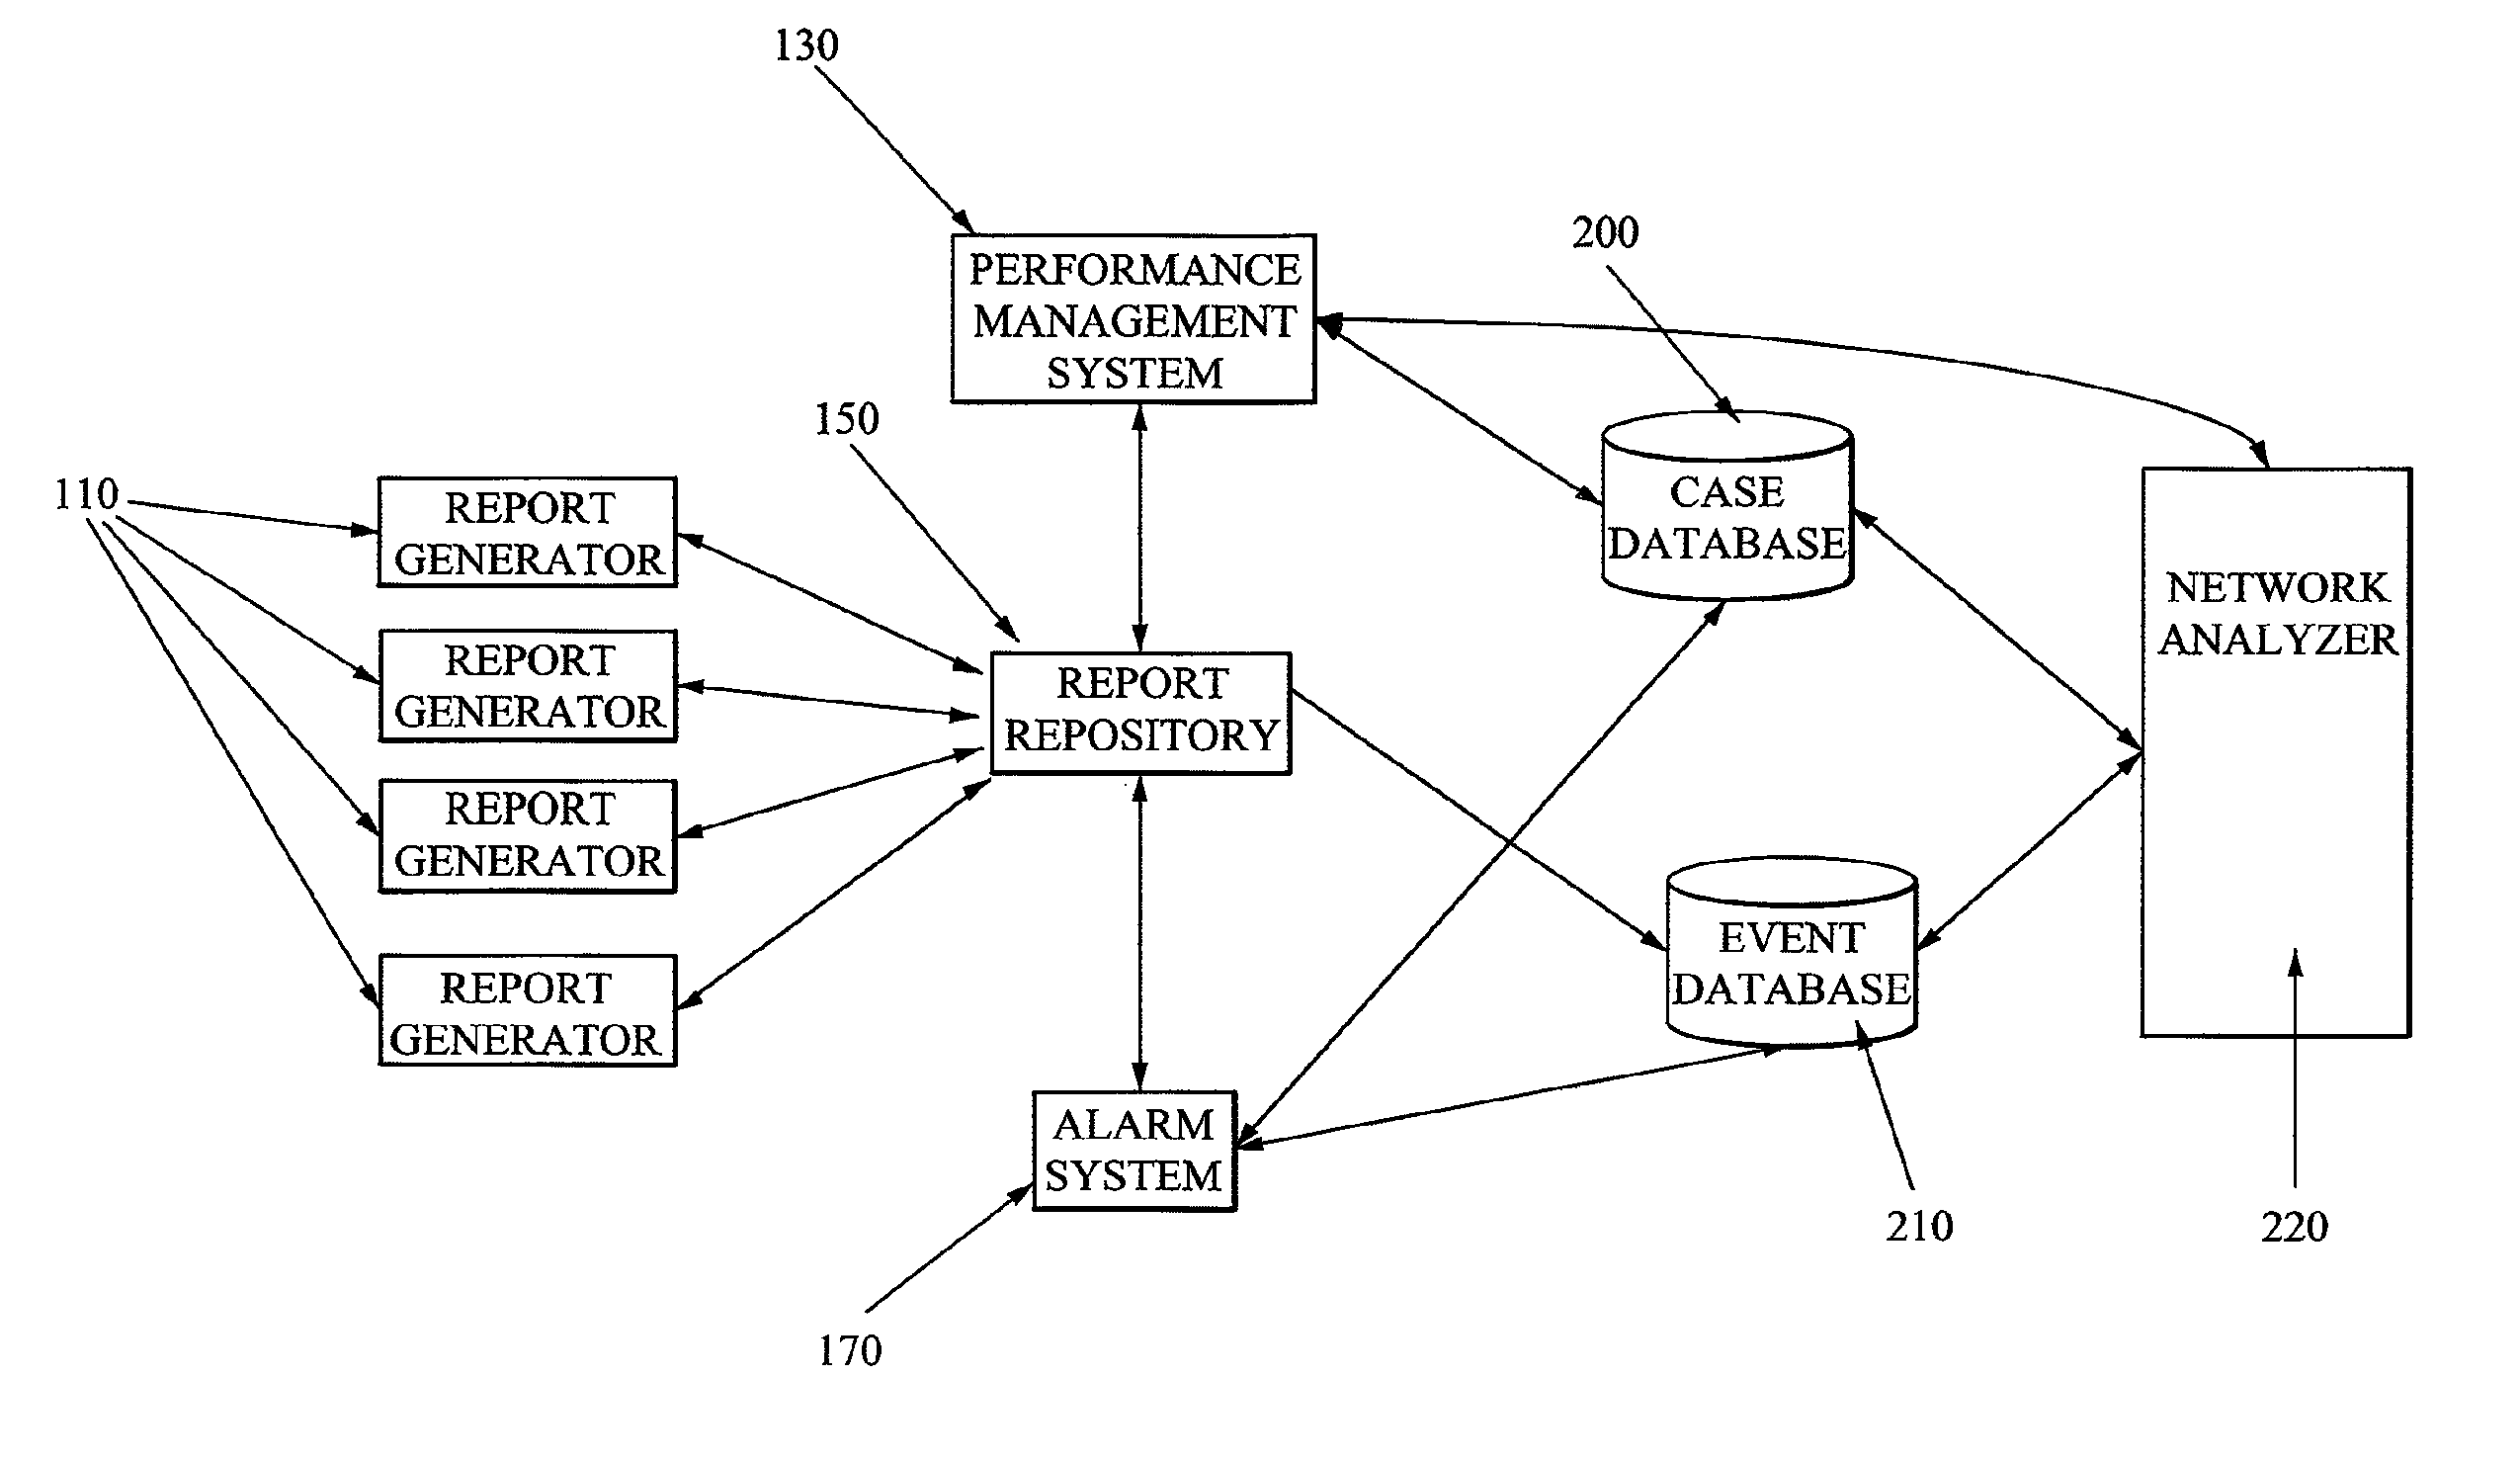 Network analysis system